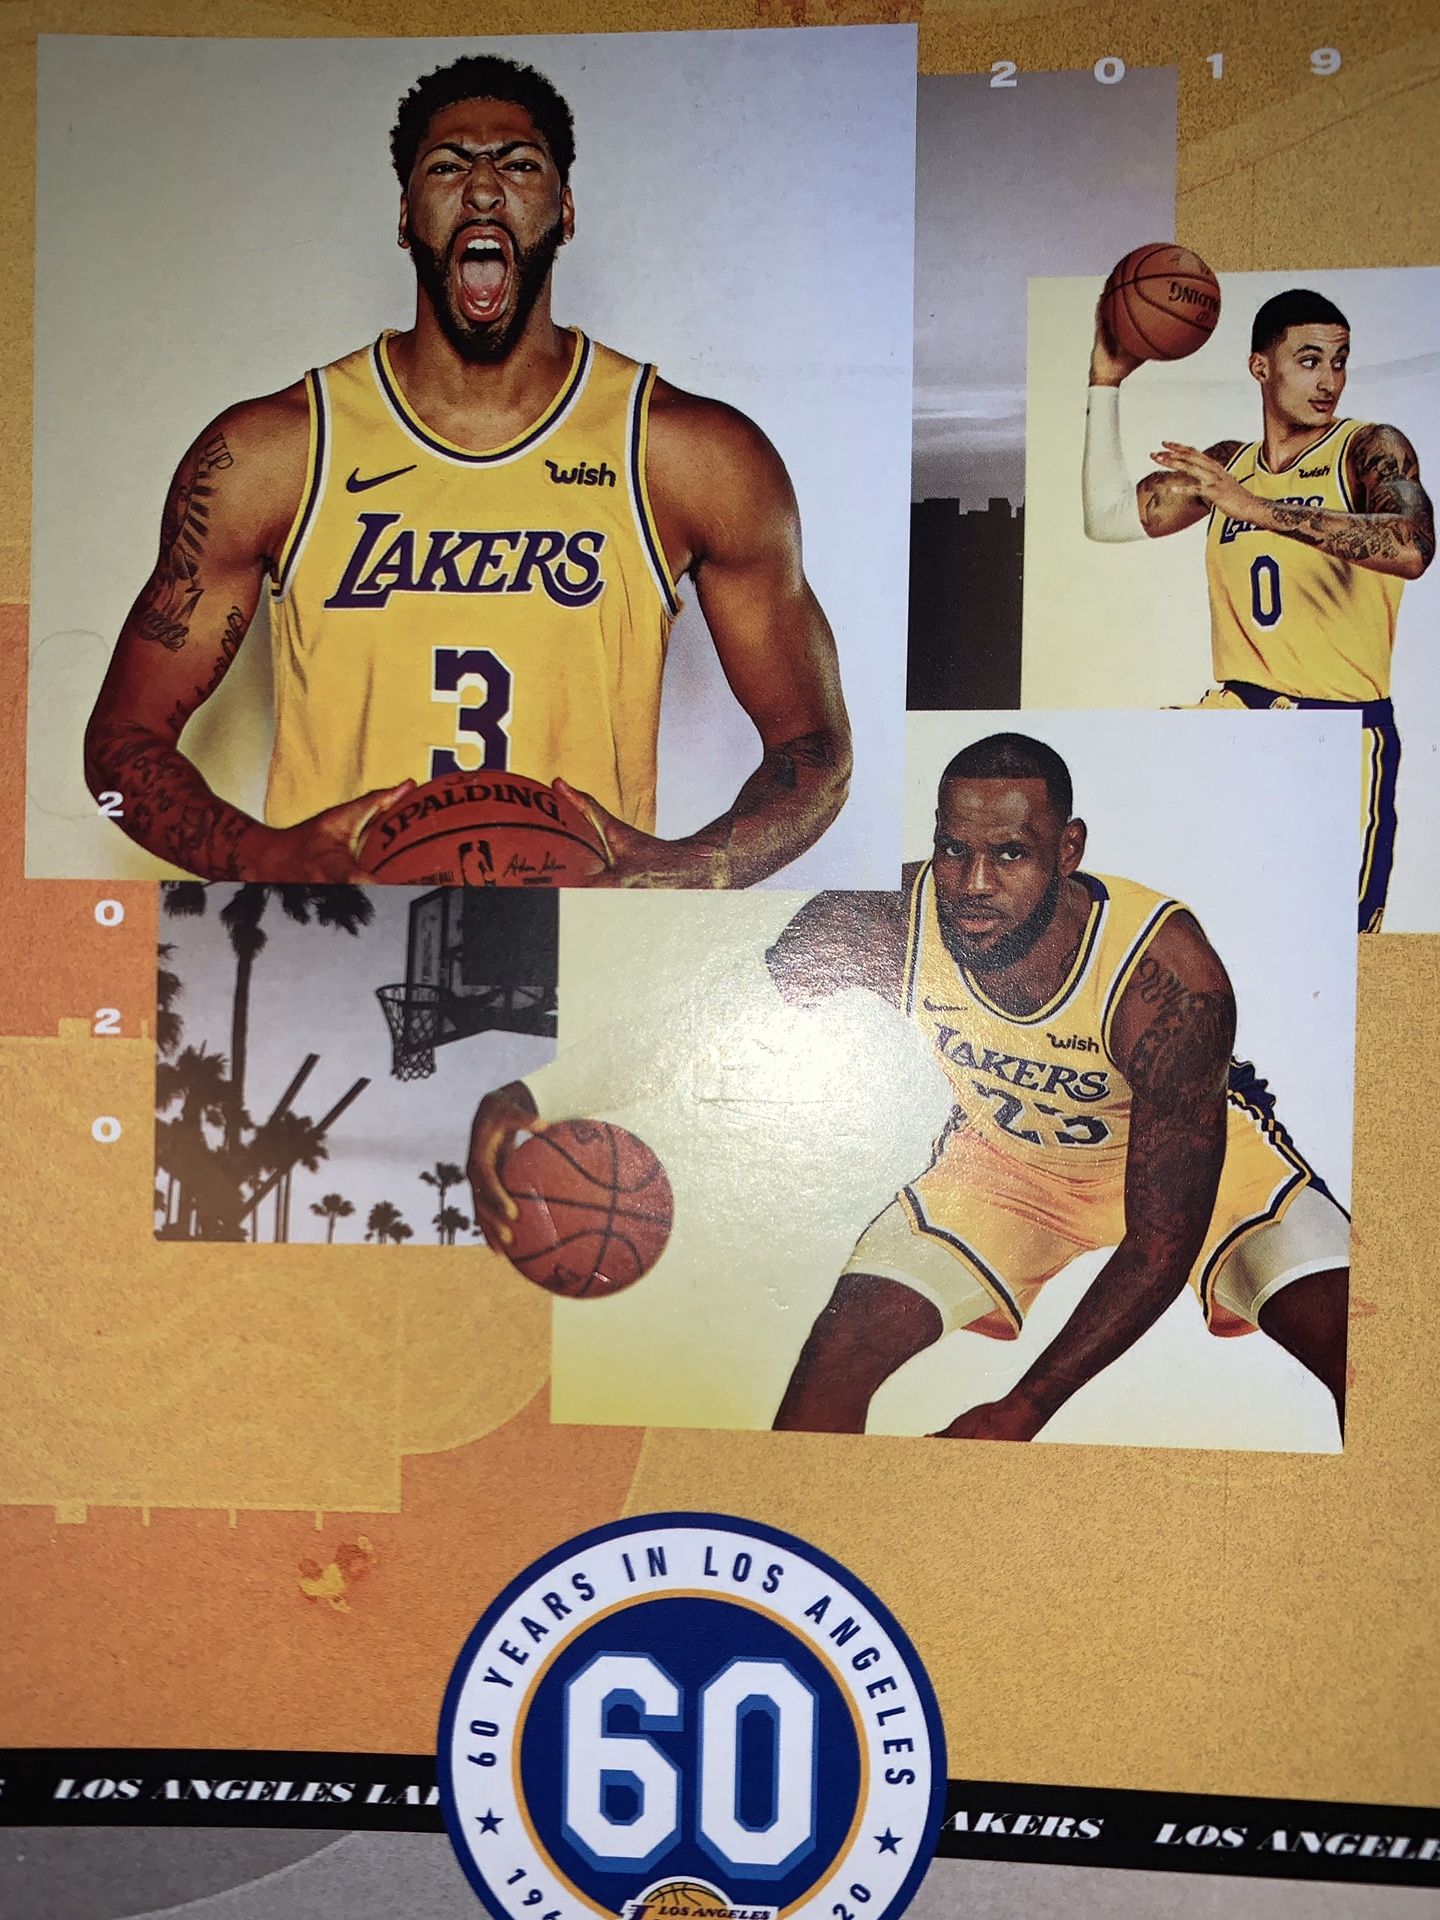 Lakers tickets vs Utah Jazz FRIDAY 10/25 @ Staples Center